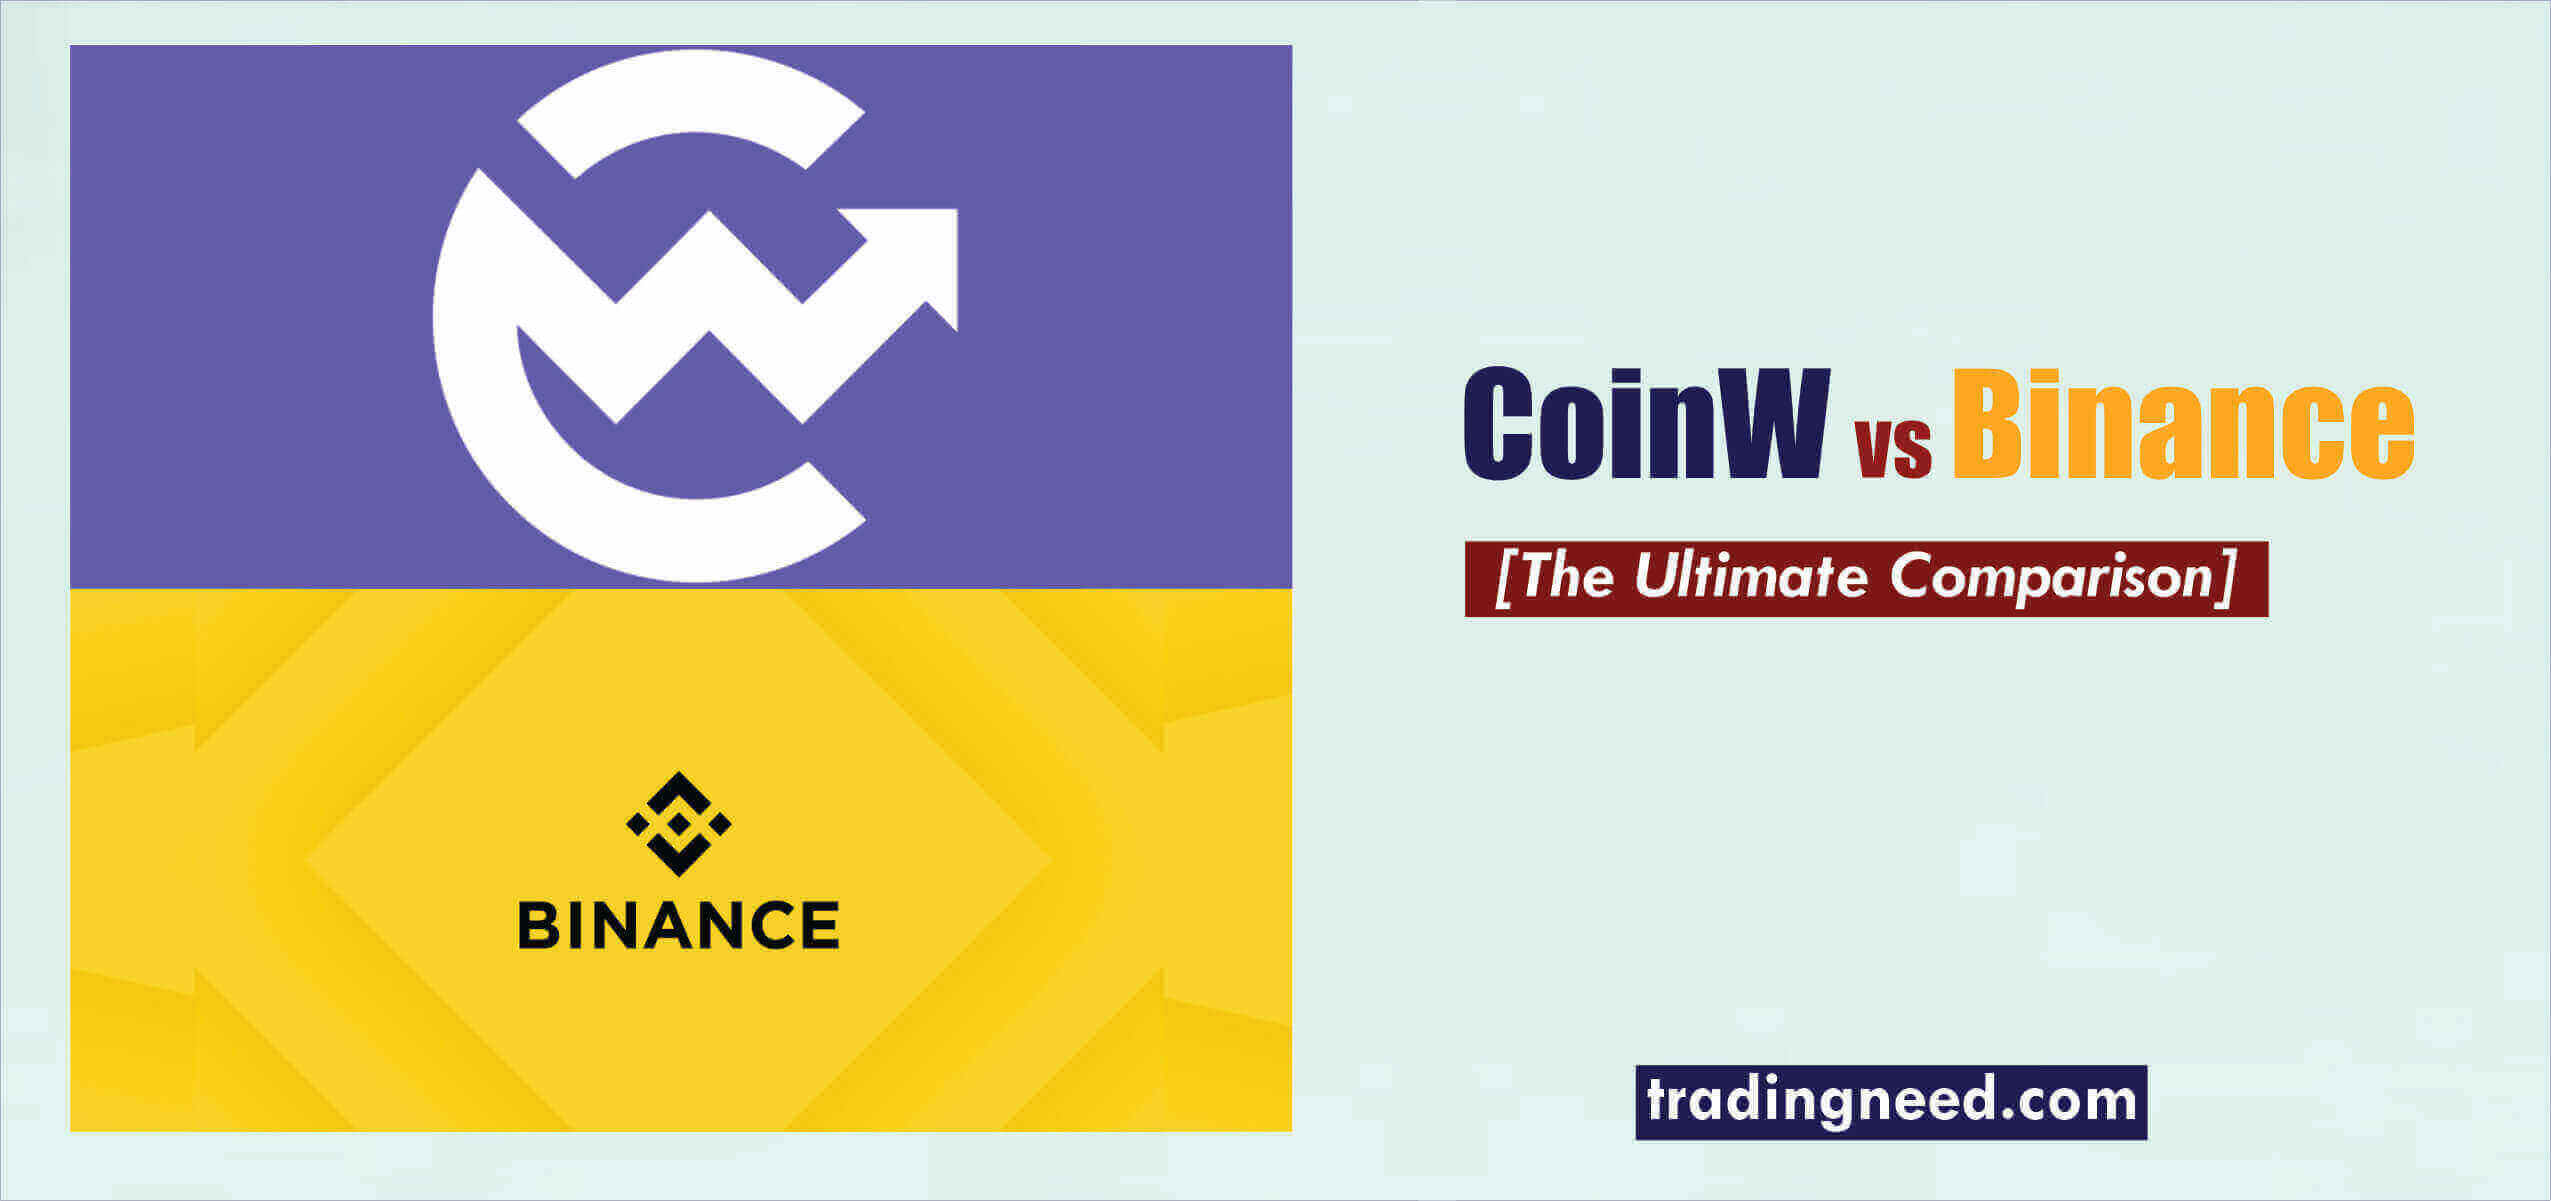 CoinW vs. Binance